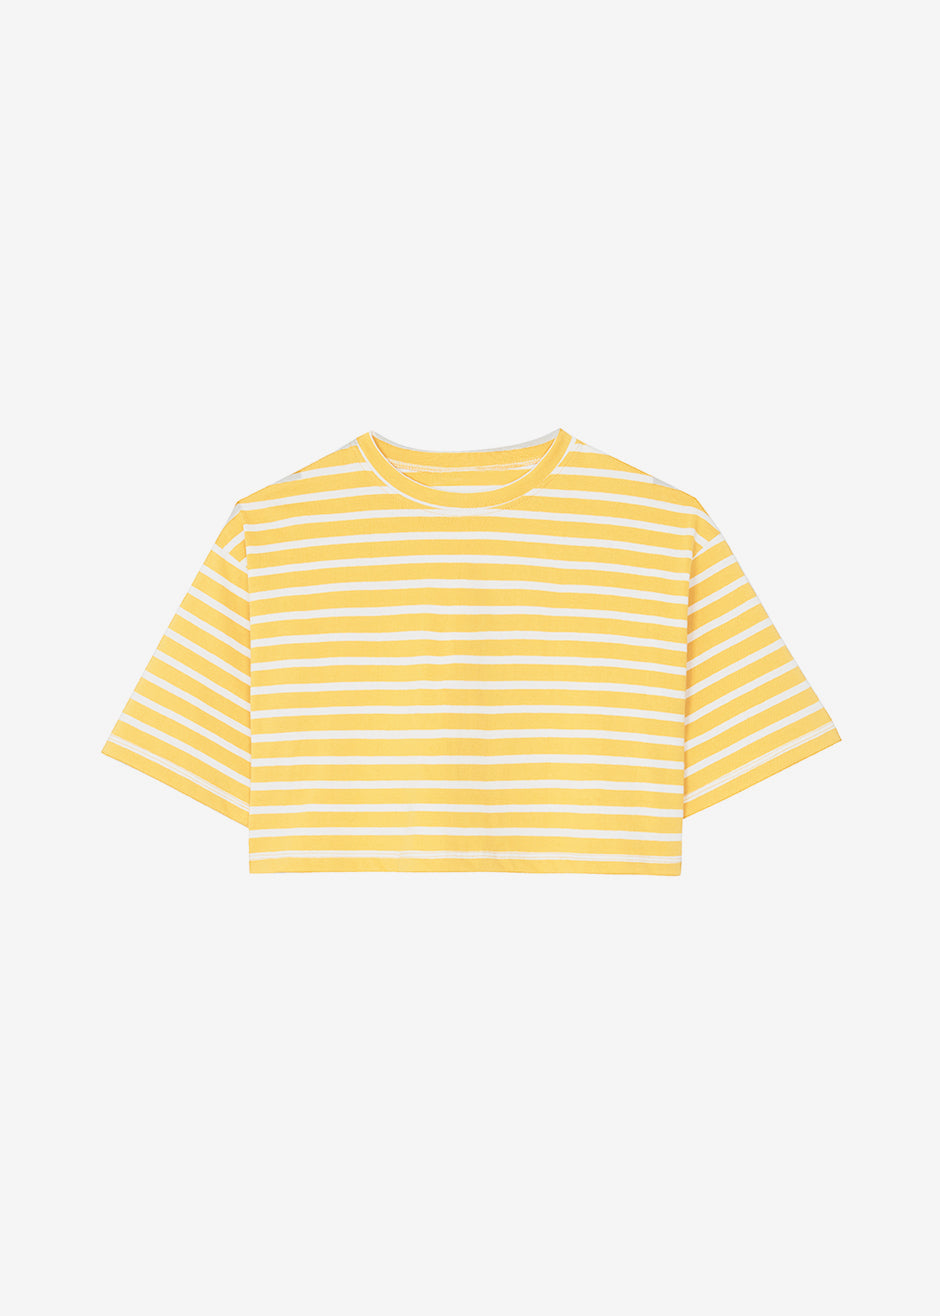 Karina Cropped T-Shirt - Yellow Gold/Off White - 7